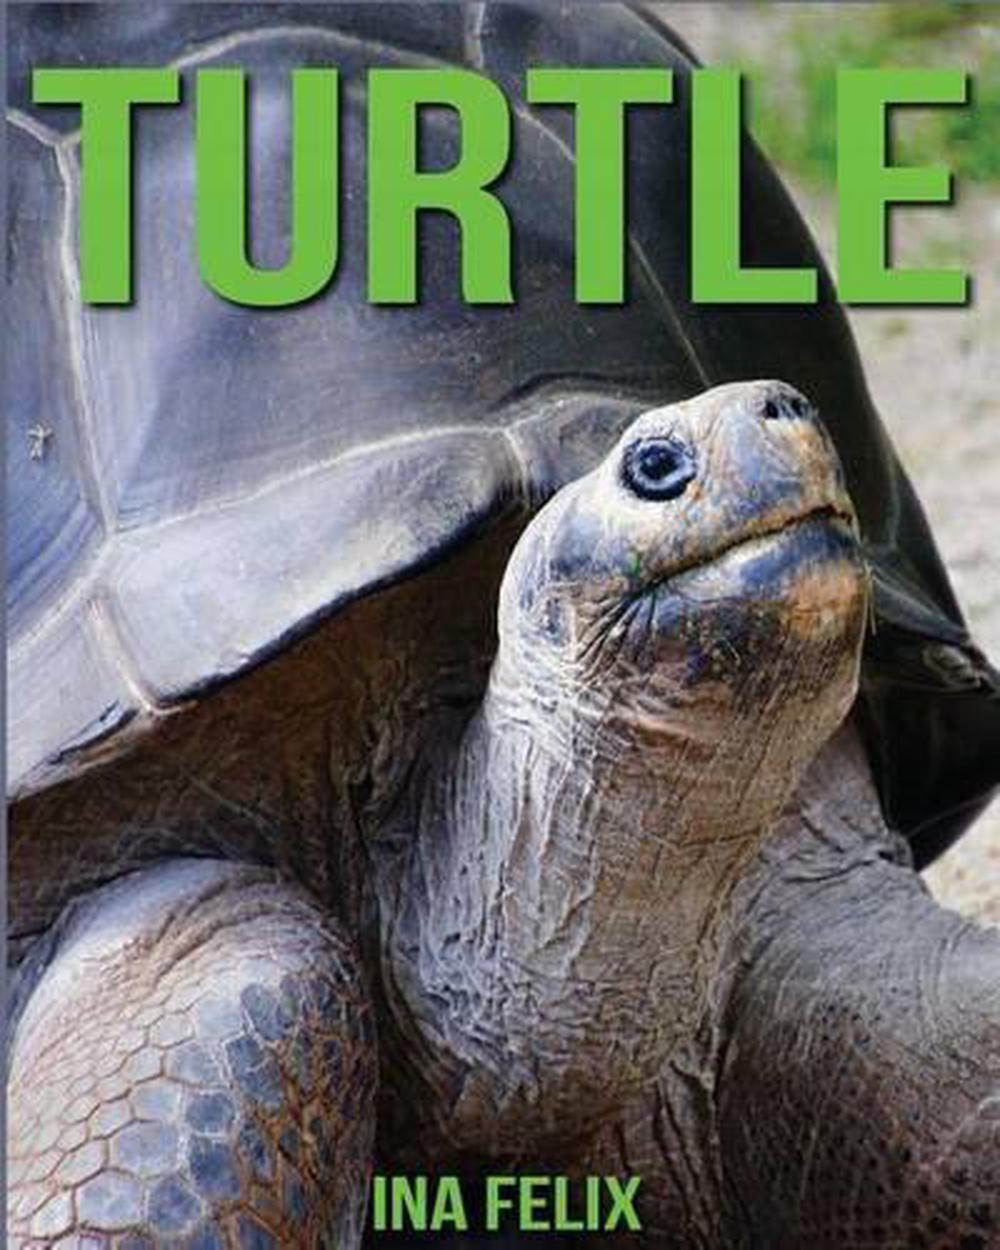 Путь черепахи книга. Книги о черепахах. Books on Turtles.